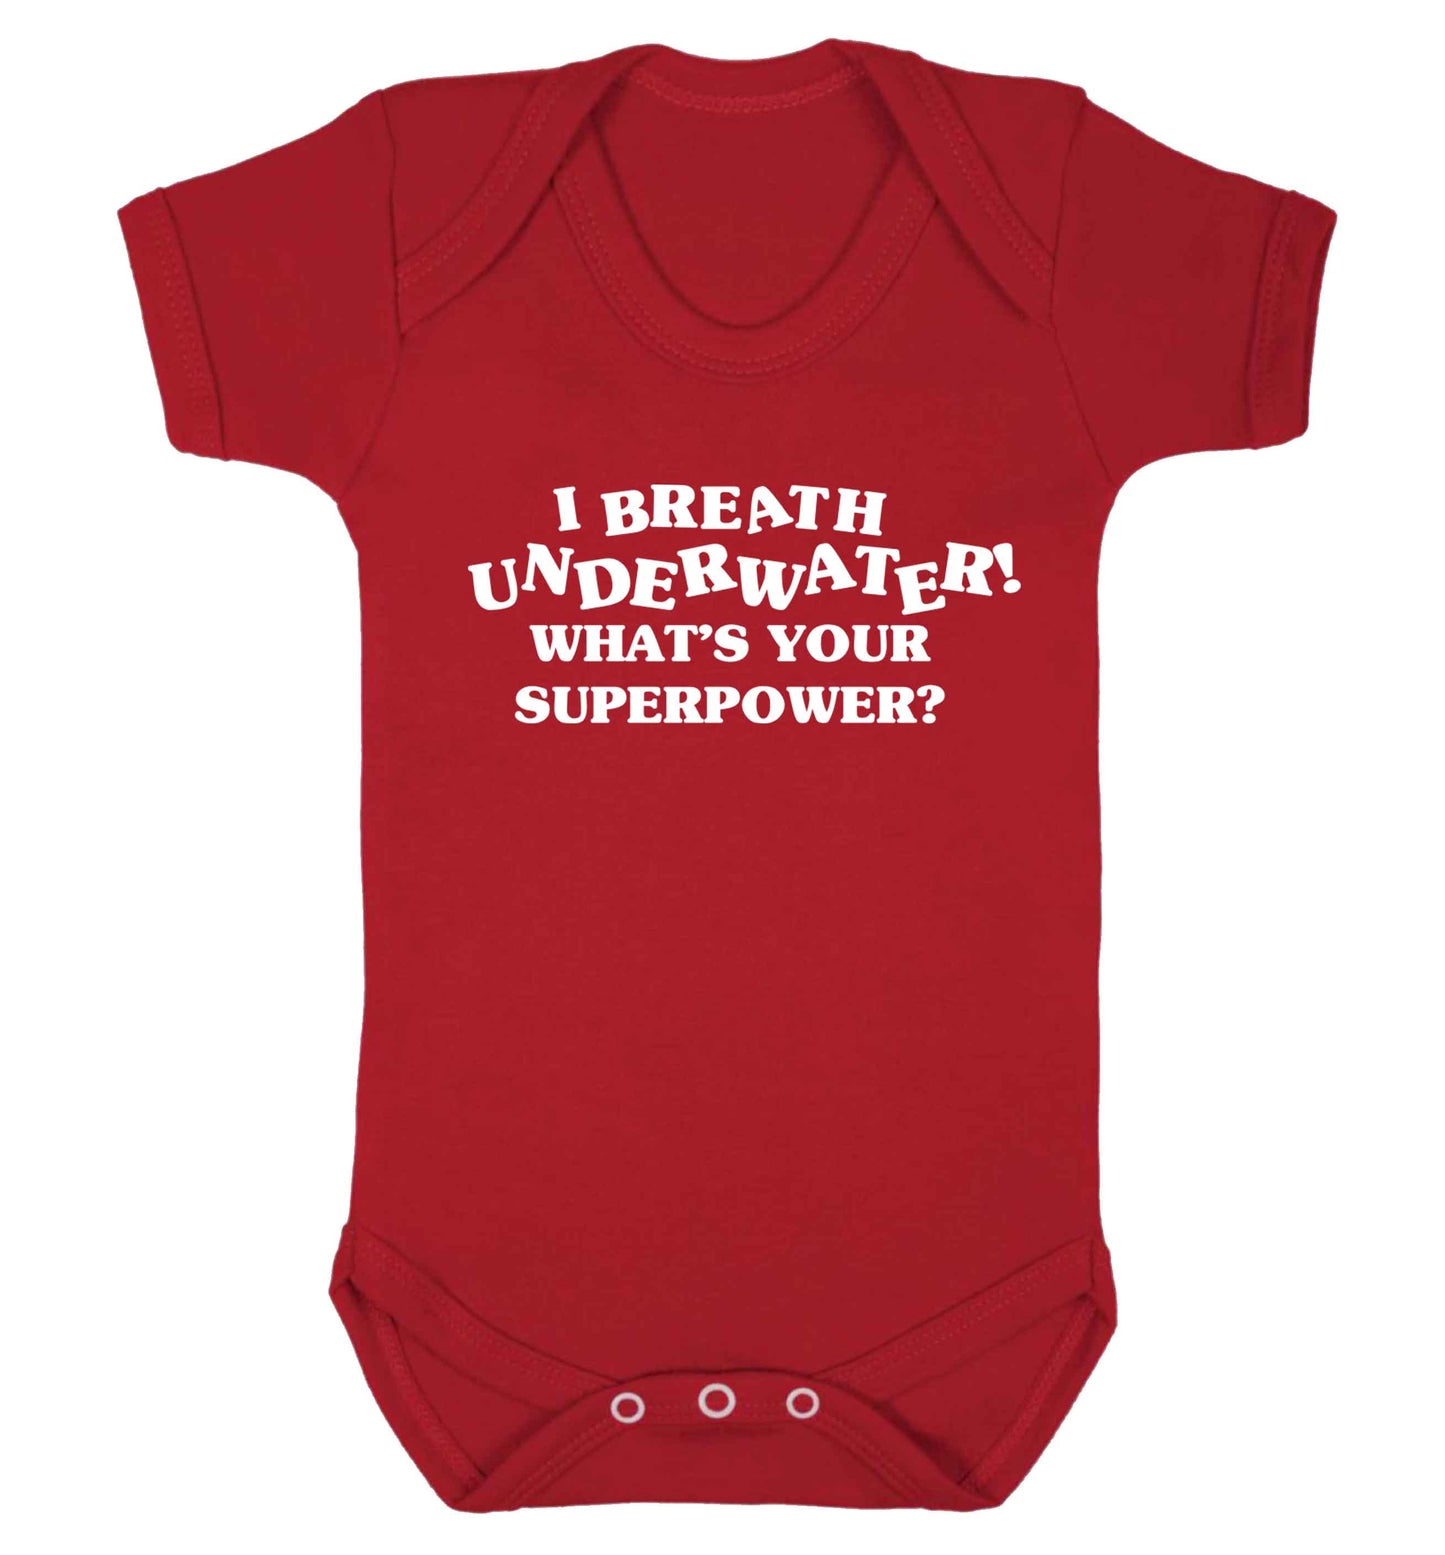 I breath underwater what's your superpower? Baby Vest red 18-24 months